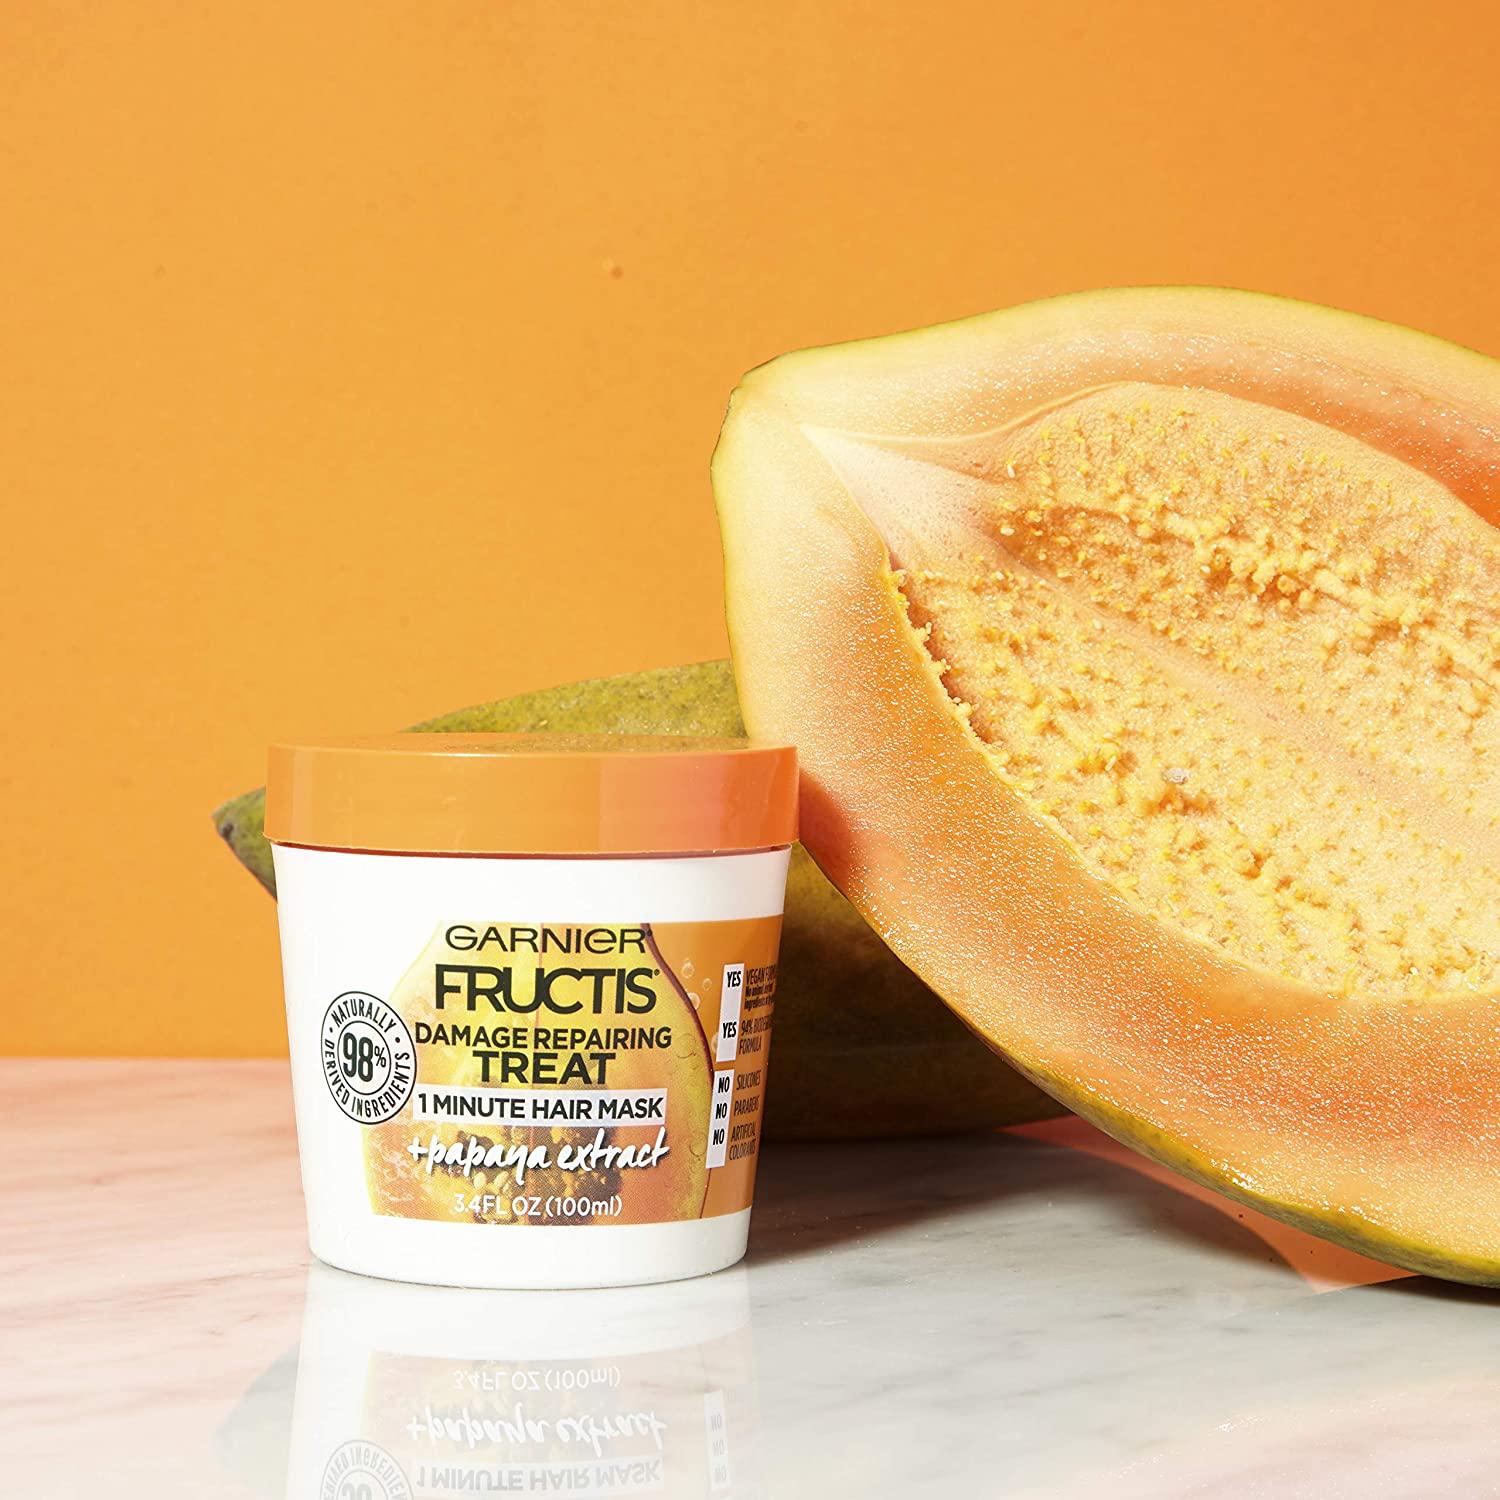 Garnier Fructis Damage Repairing Treat 1 Minute Hair Mask + Papaya Extract   fl oz (100 ml)